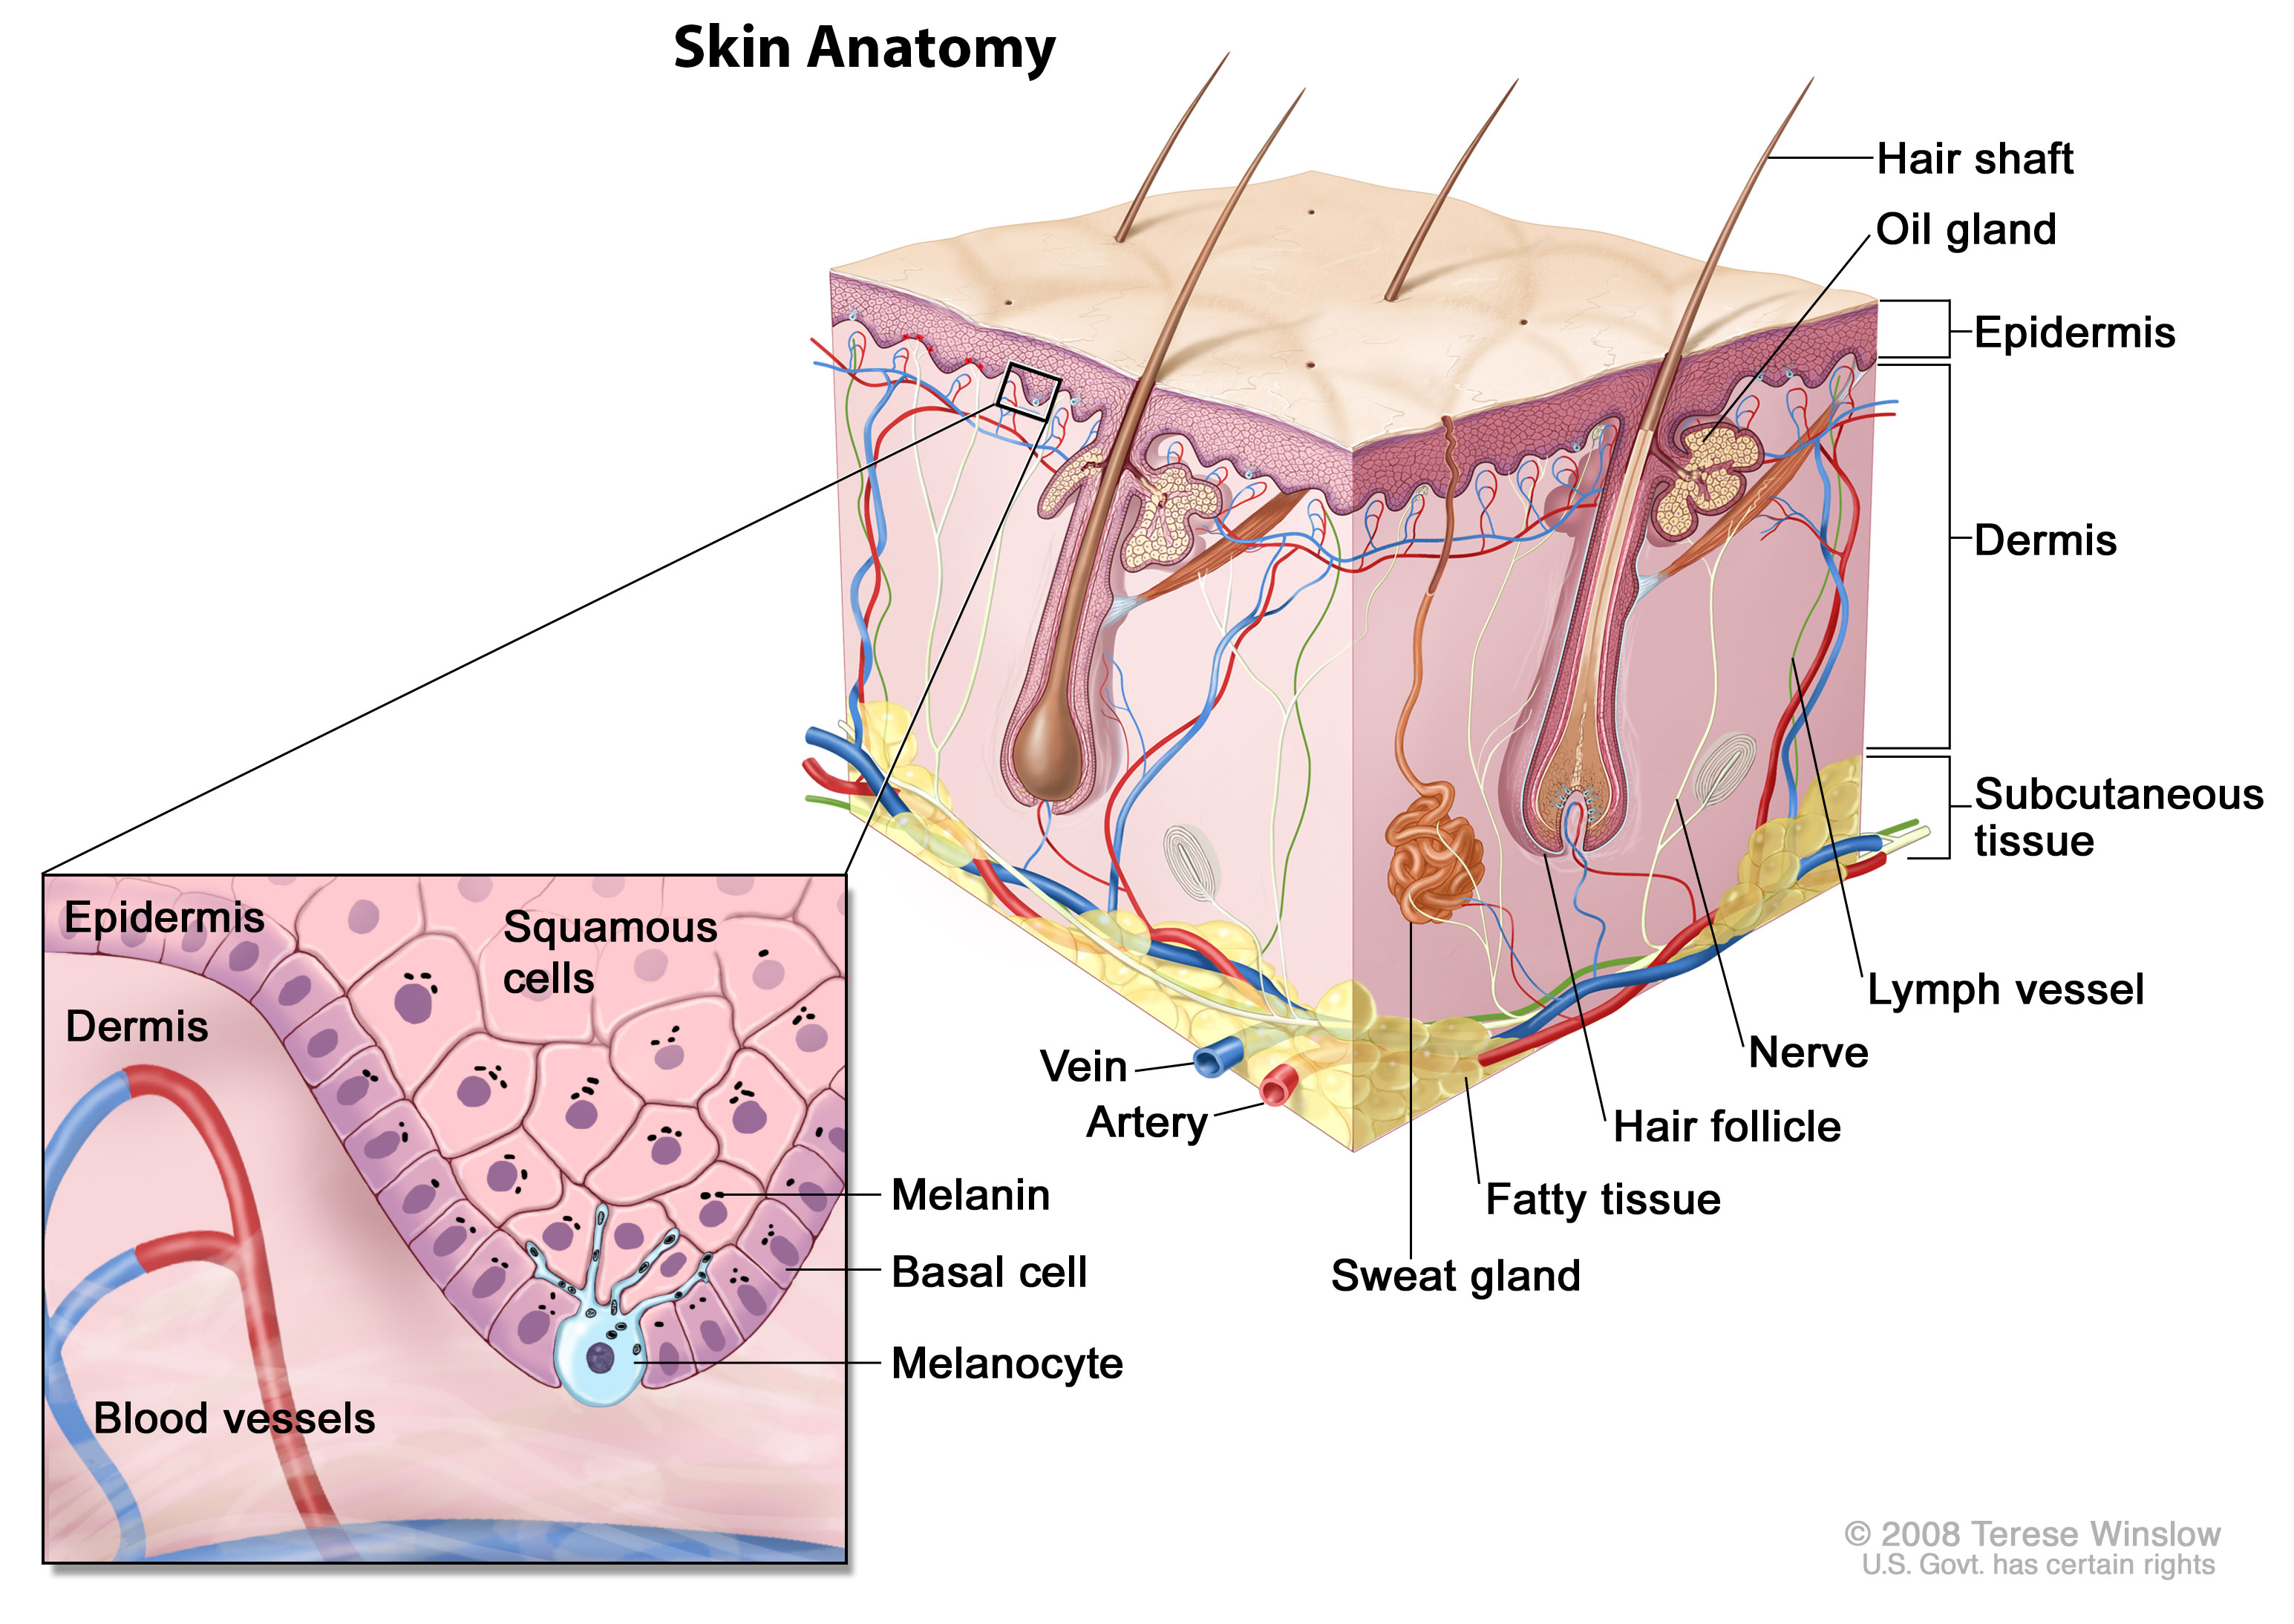 Diagram illustrating skin anatomy for understanding melanoma and other skin cancers